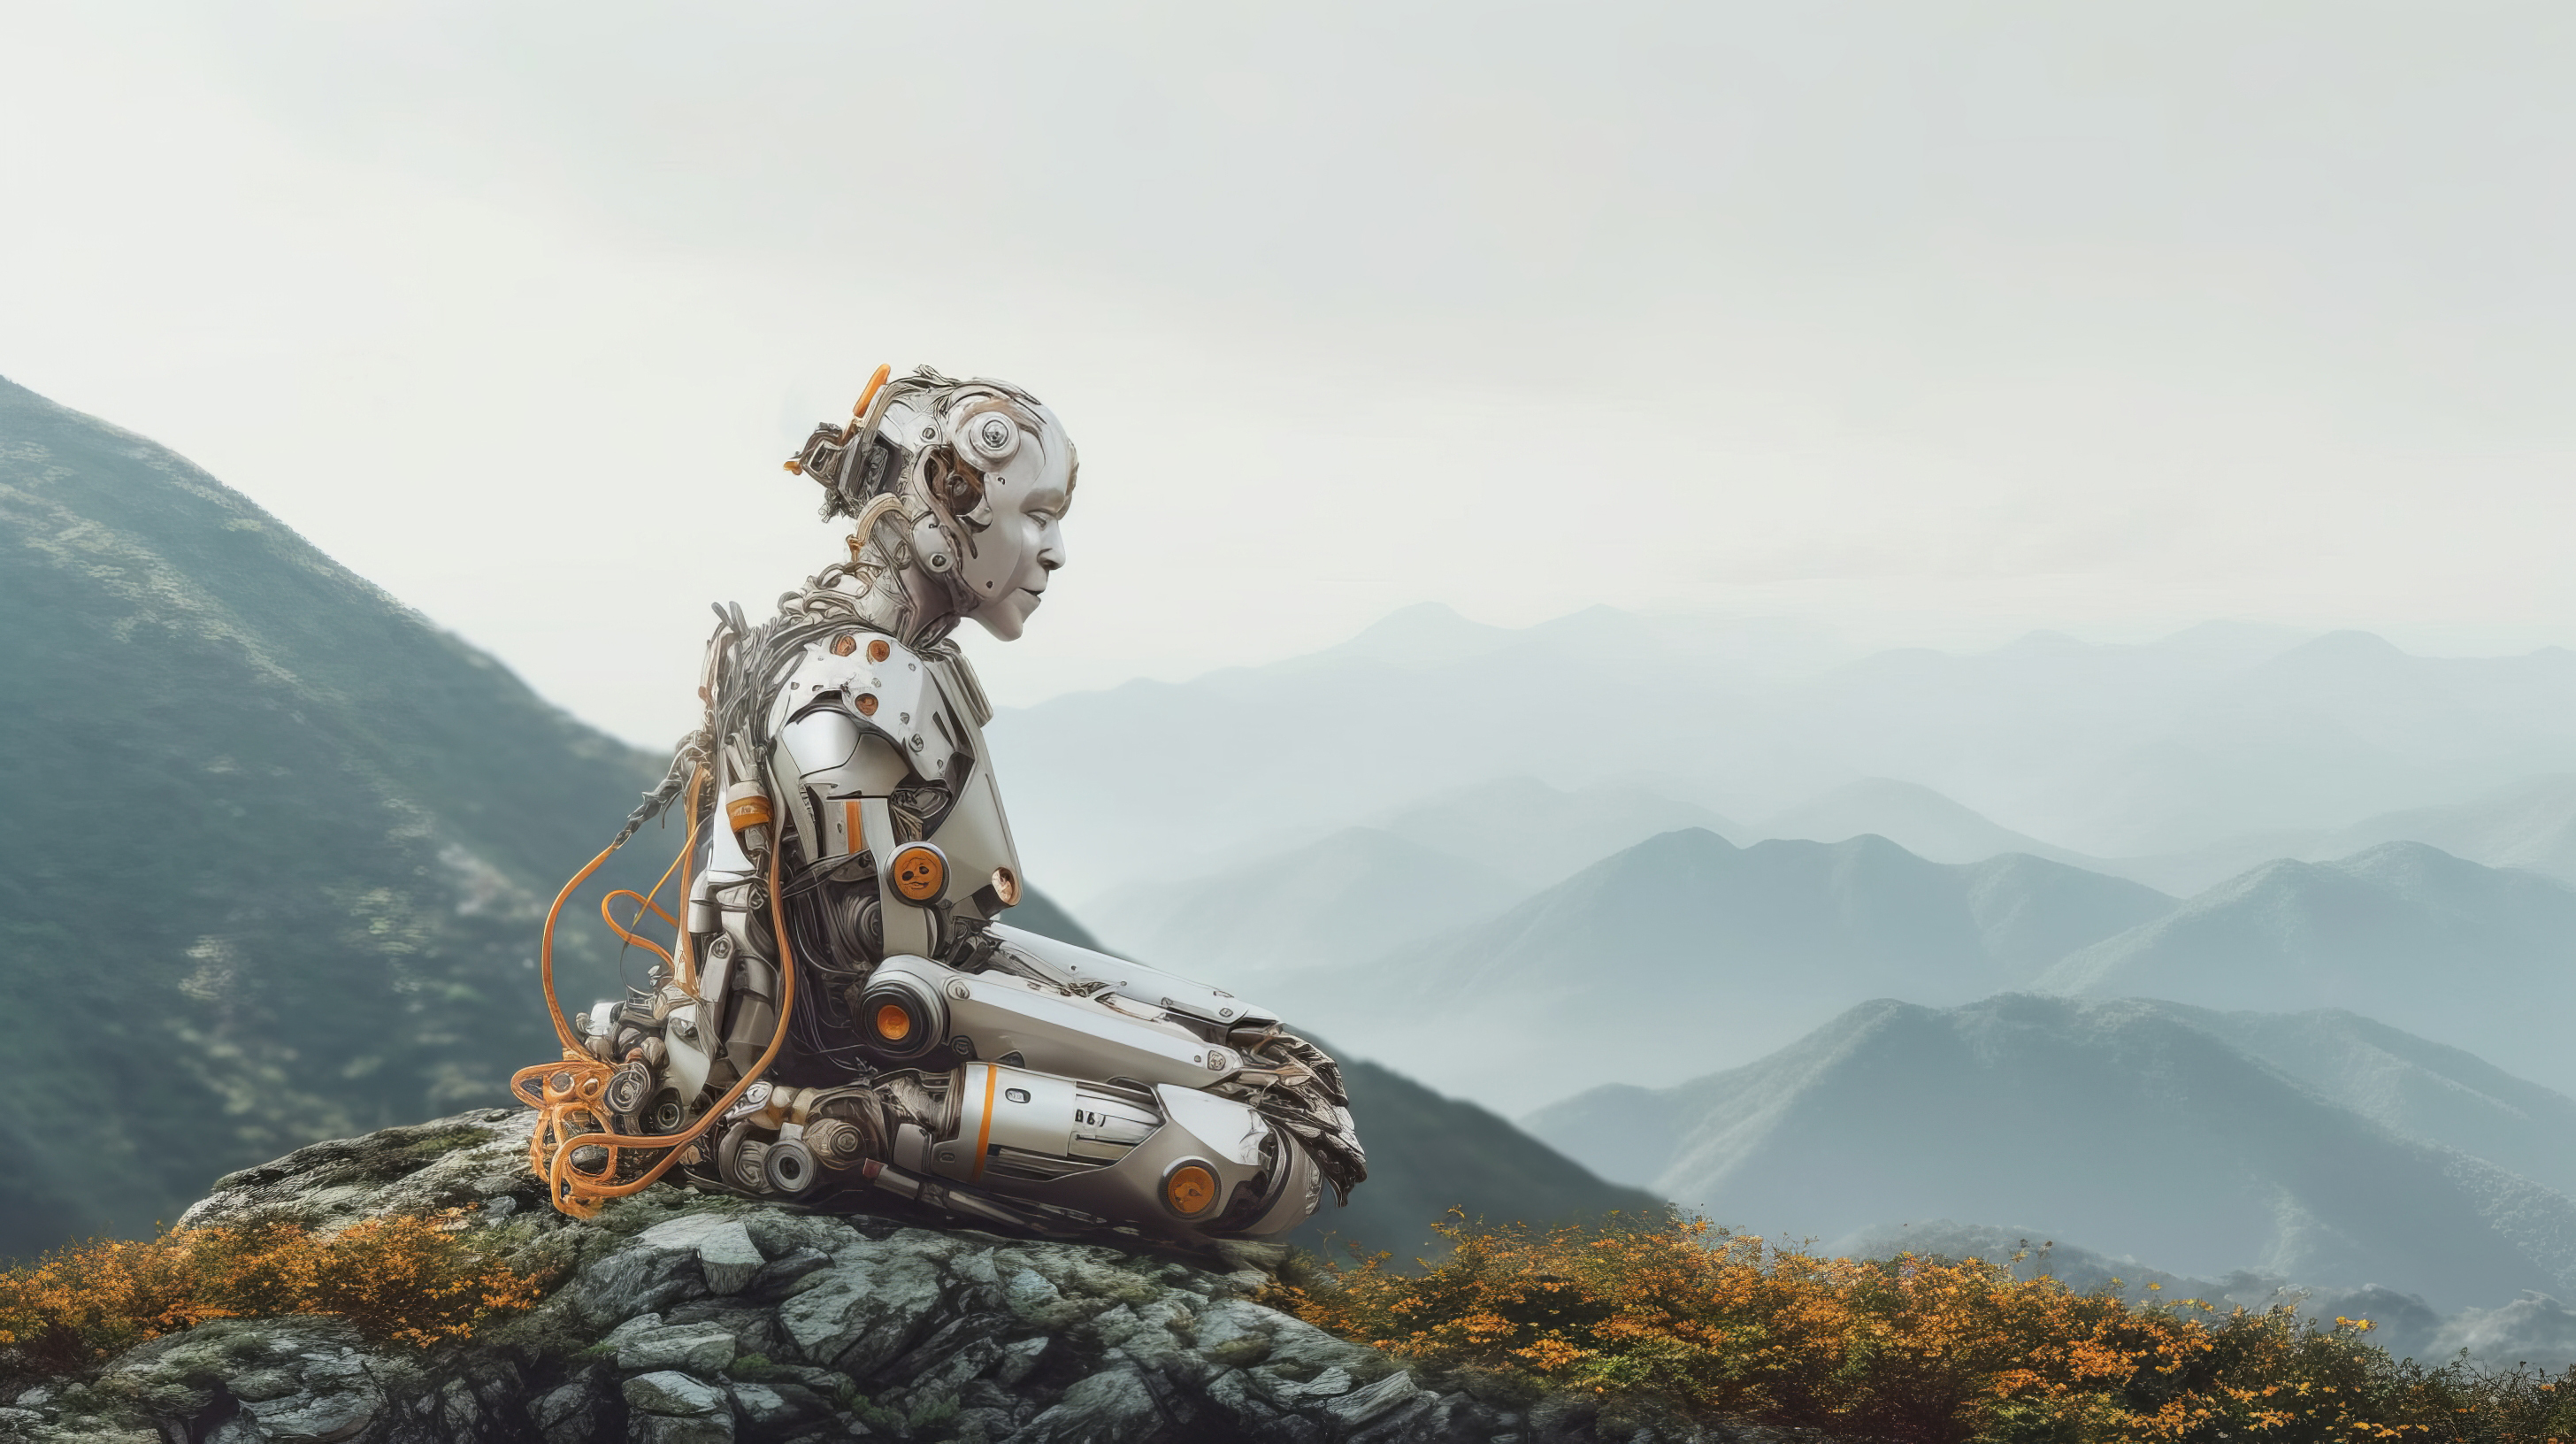 General 2912x1632 AI art robot monks Buddhism mountains landscape technology simple background nature